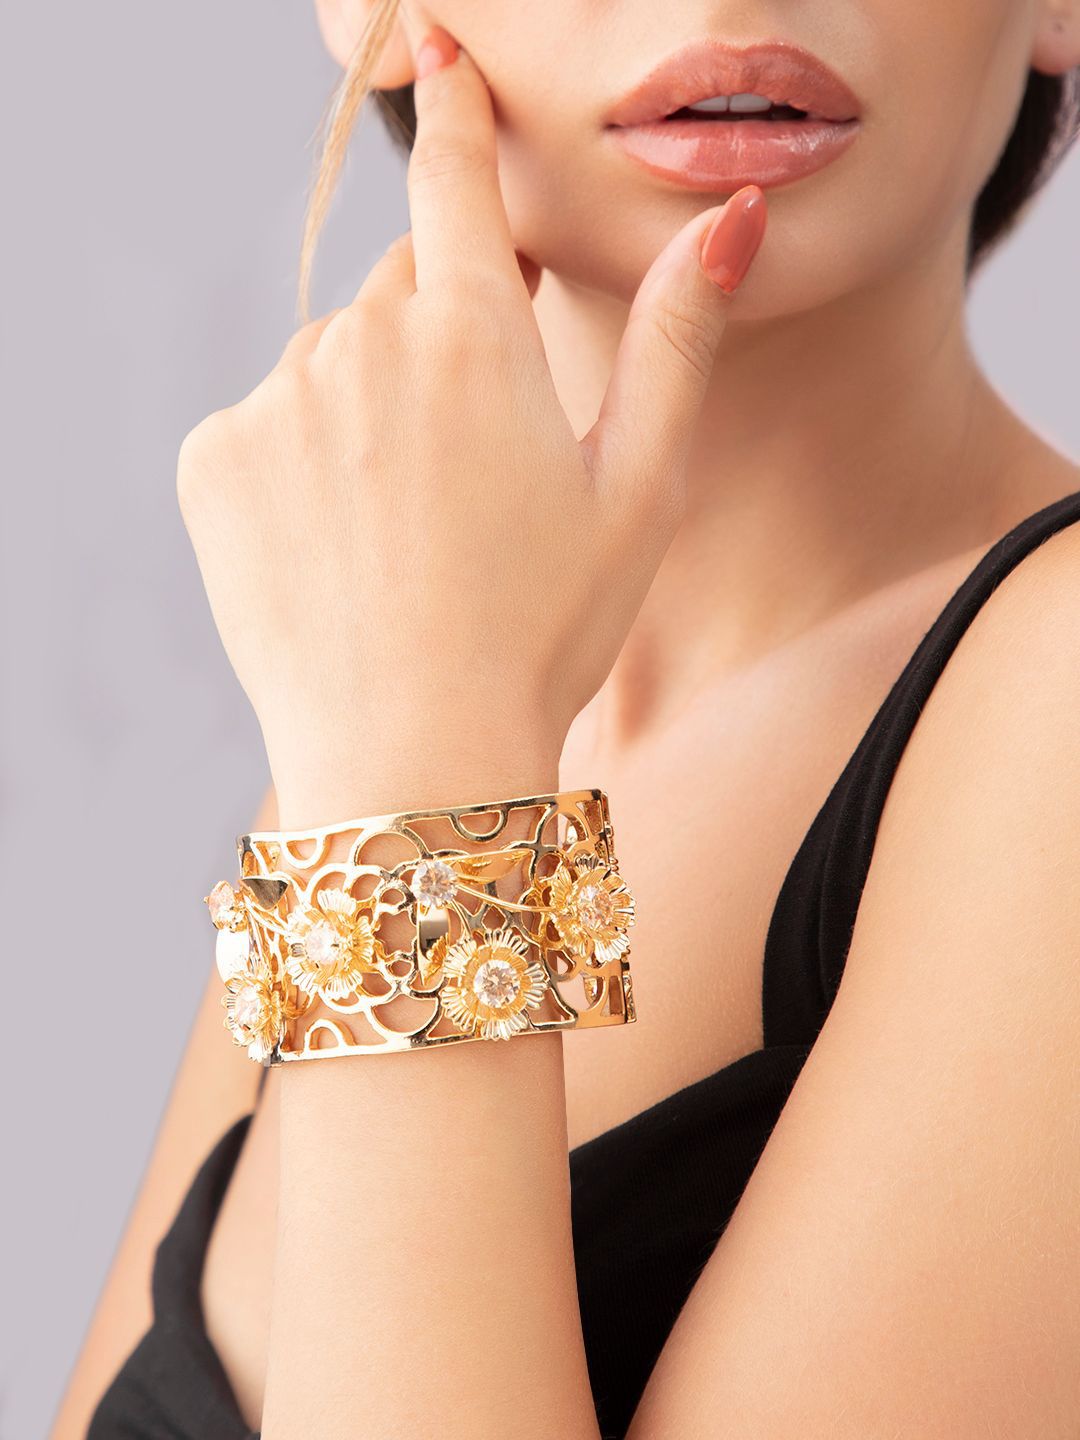 Rubans Voguish Women Gold-Plated Bangle-Style Bracelet Price in India